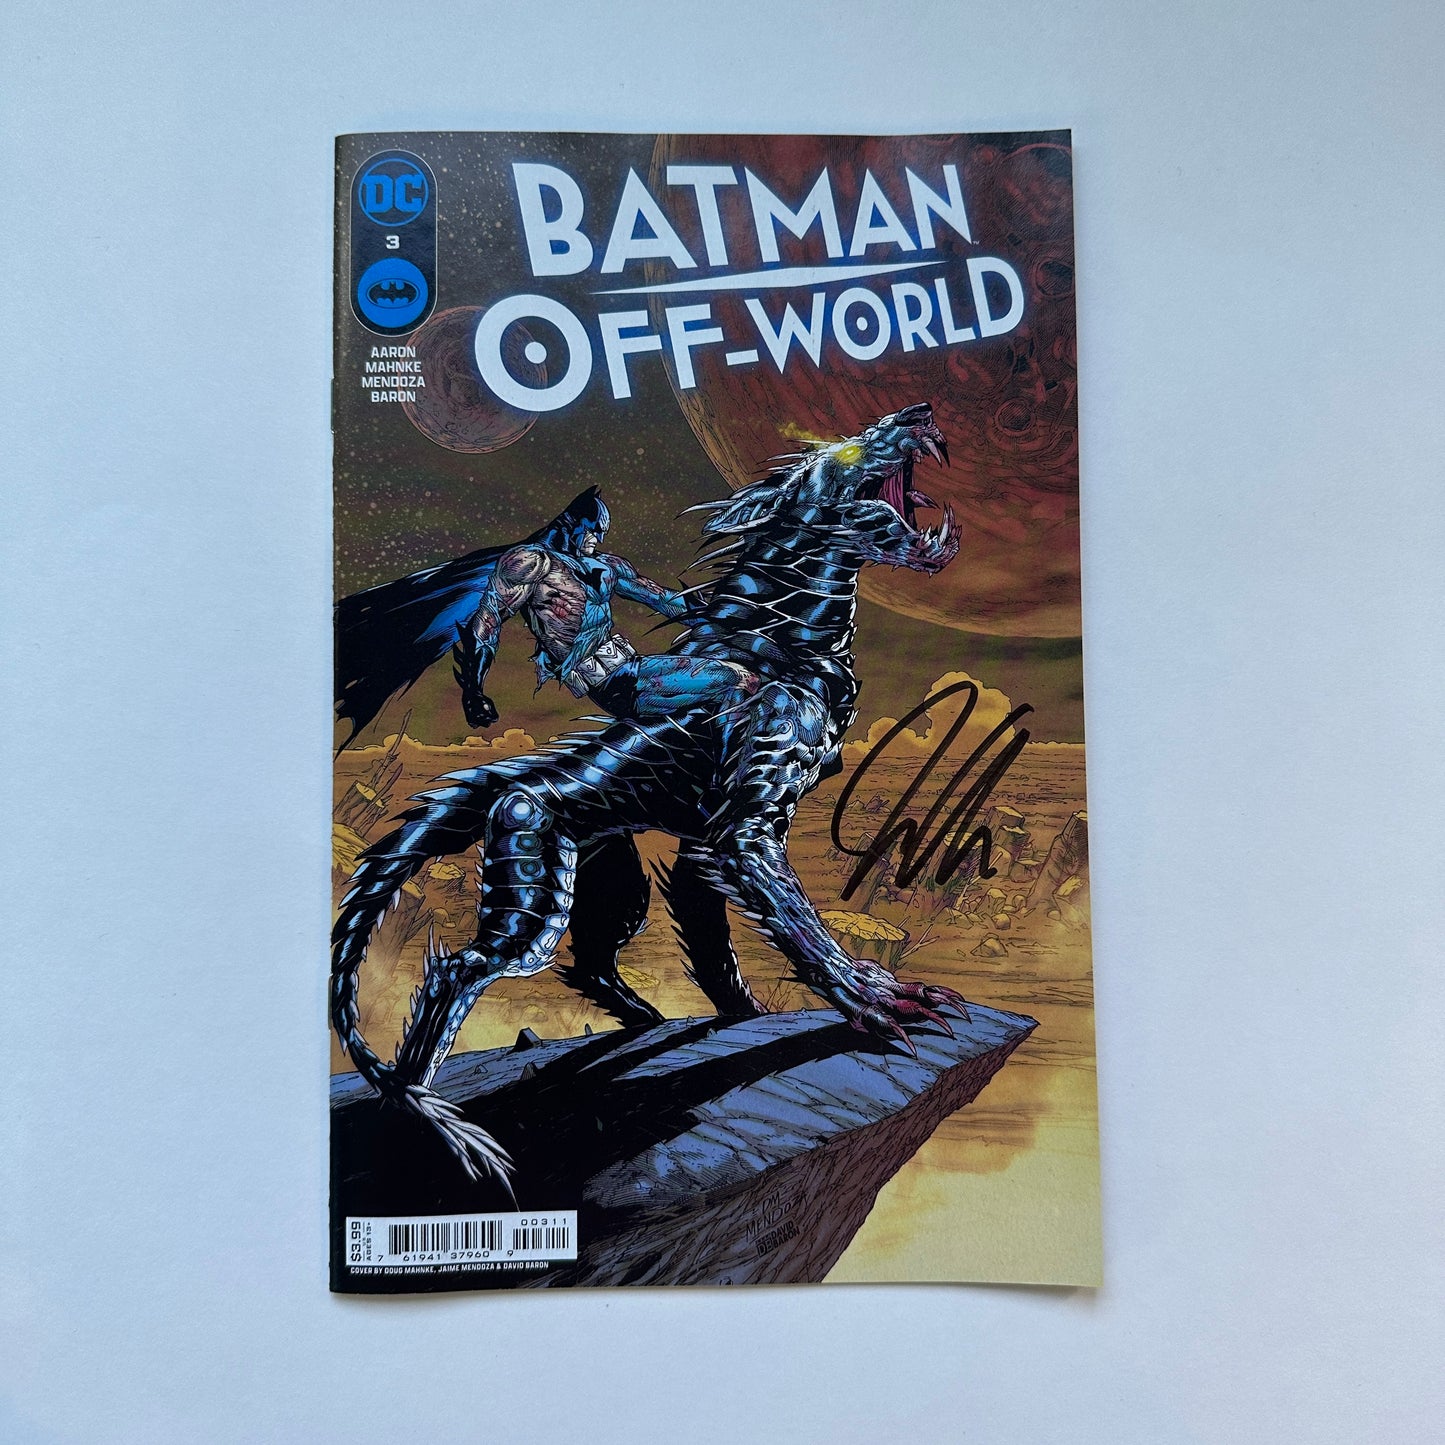 BATMAN OFF-WORLD #3 (OF 6) CVR A DOUG MAHNK - SIGNED BY JASON AARON